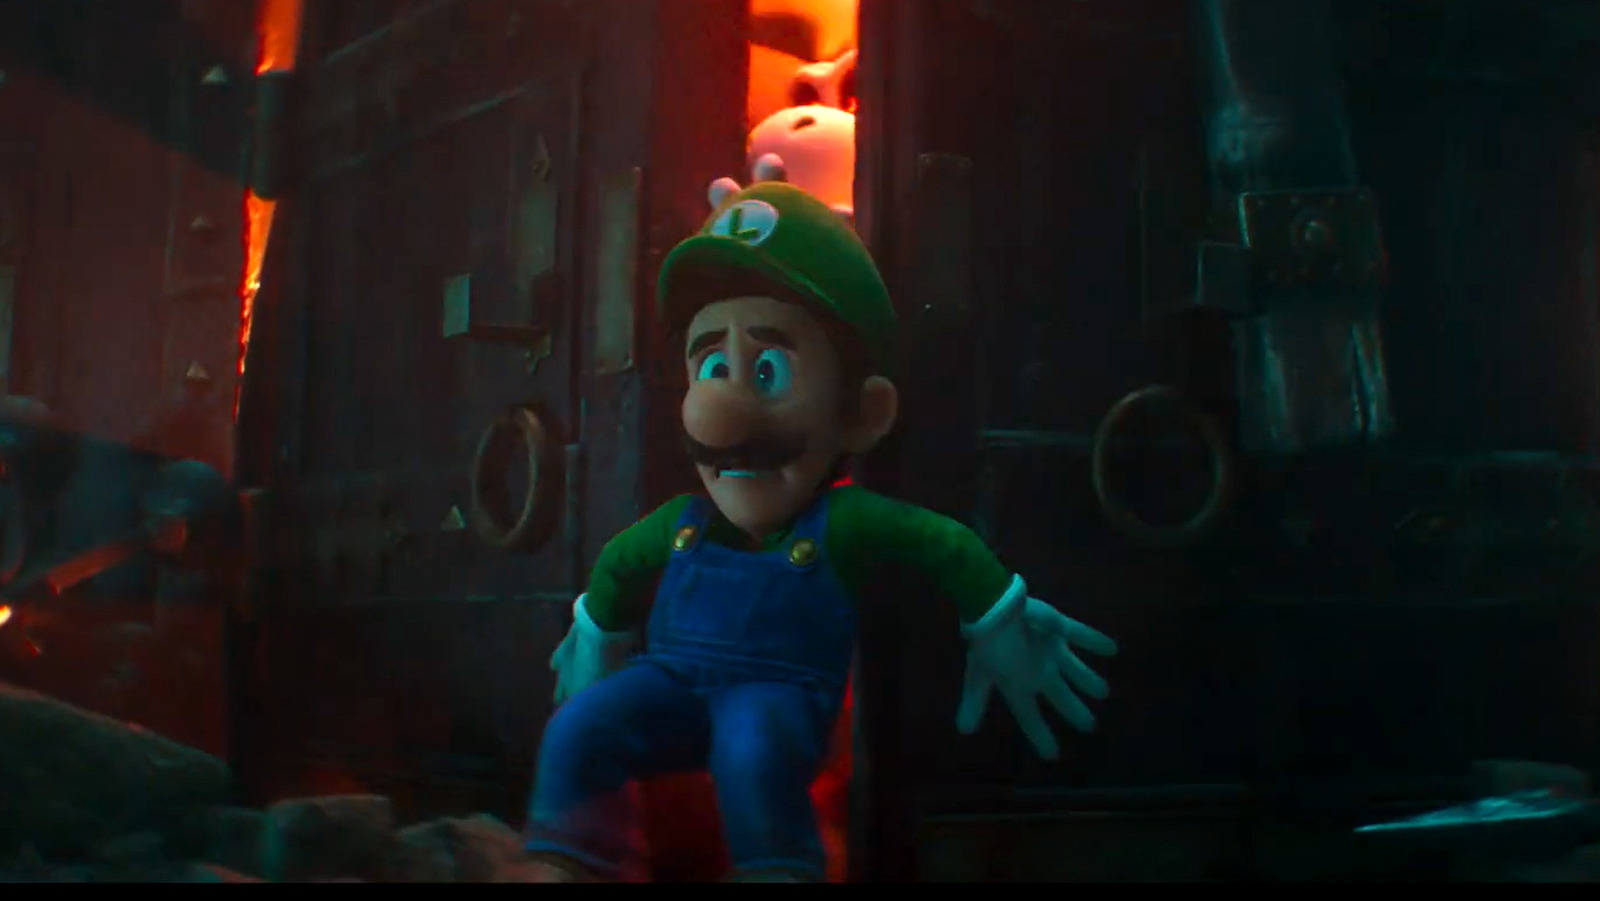 Super Mario Brothers - Trailer. 